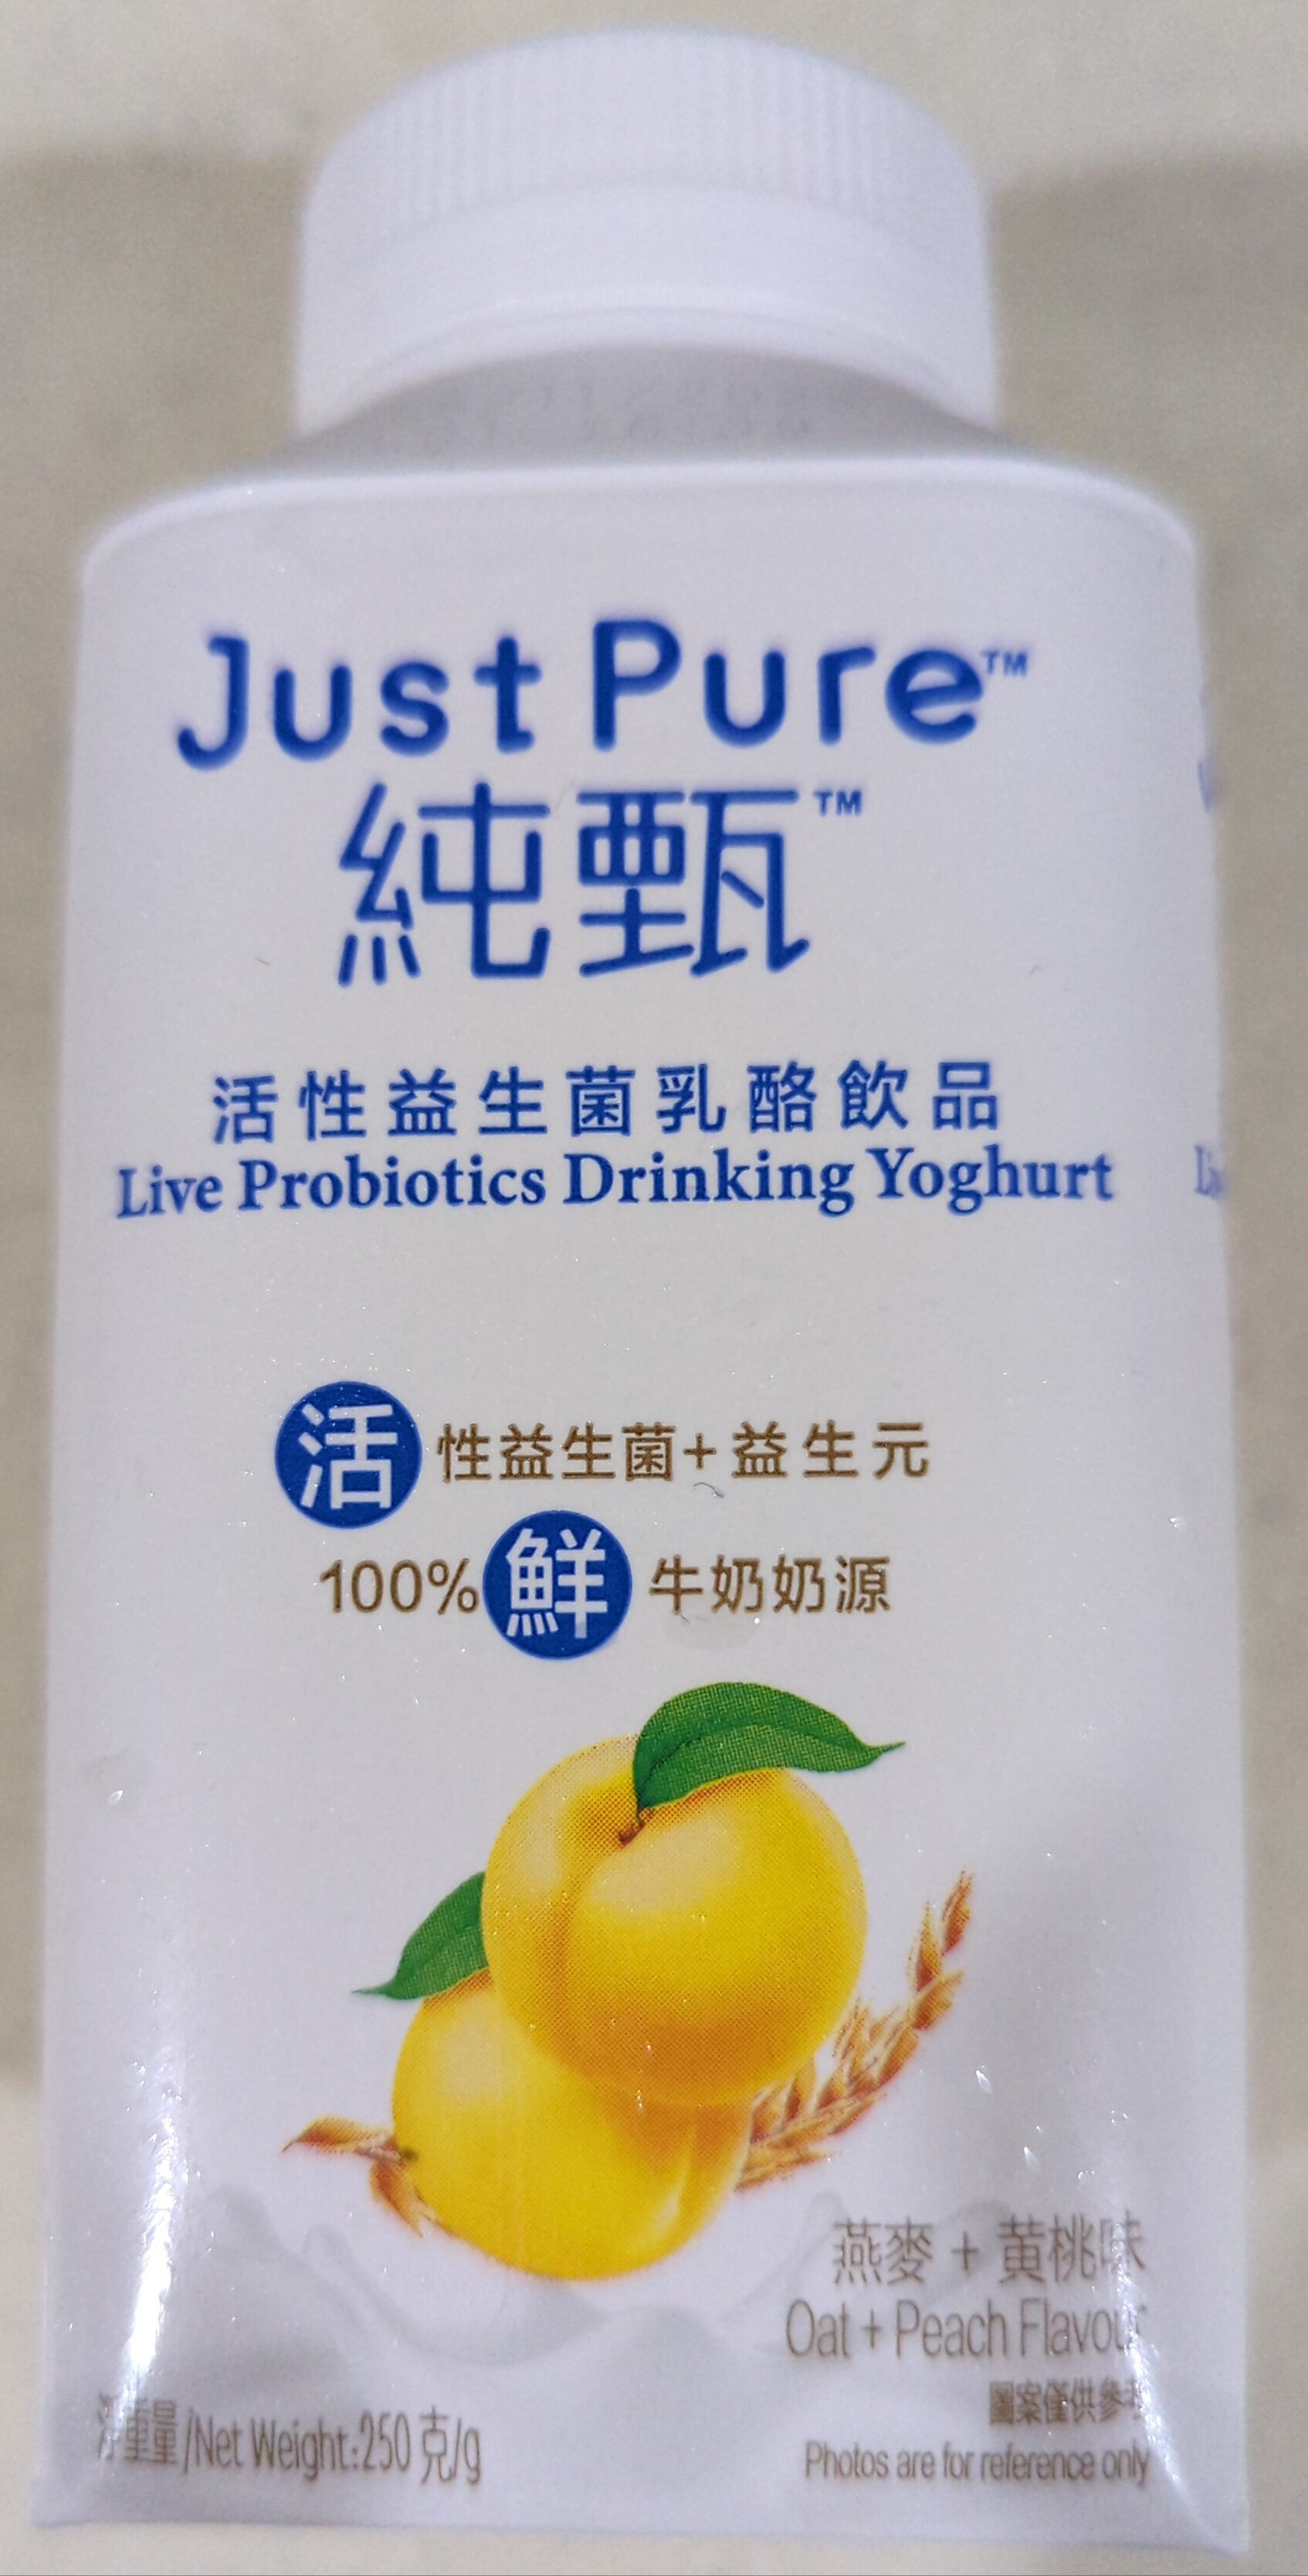 Live Probiotics Drinking Yoghurt Oat + Peach Flavour - Product